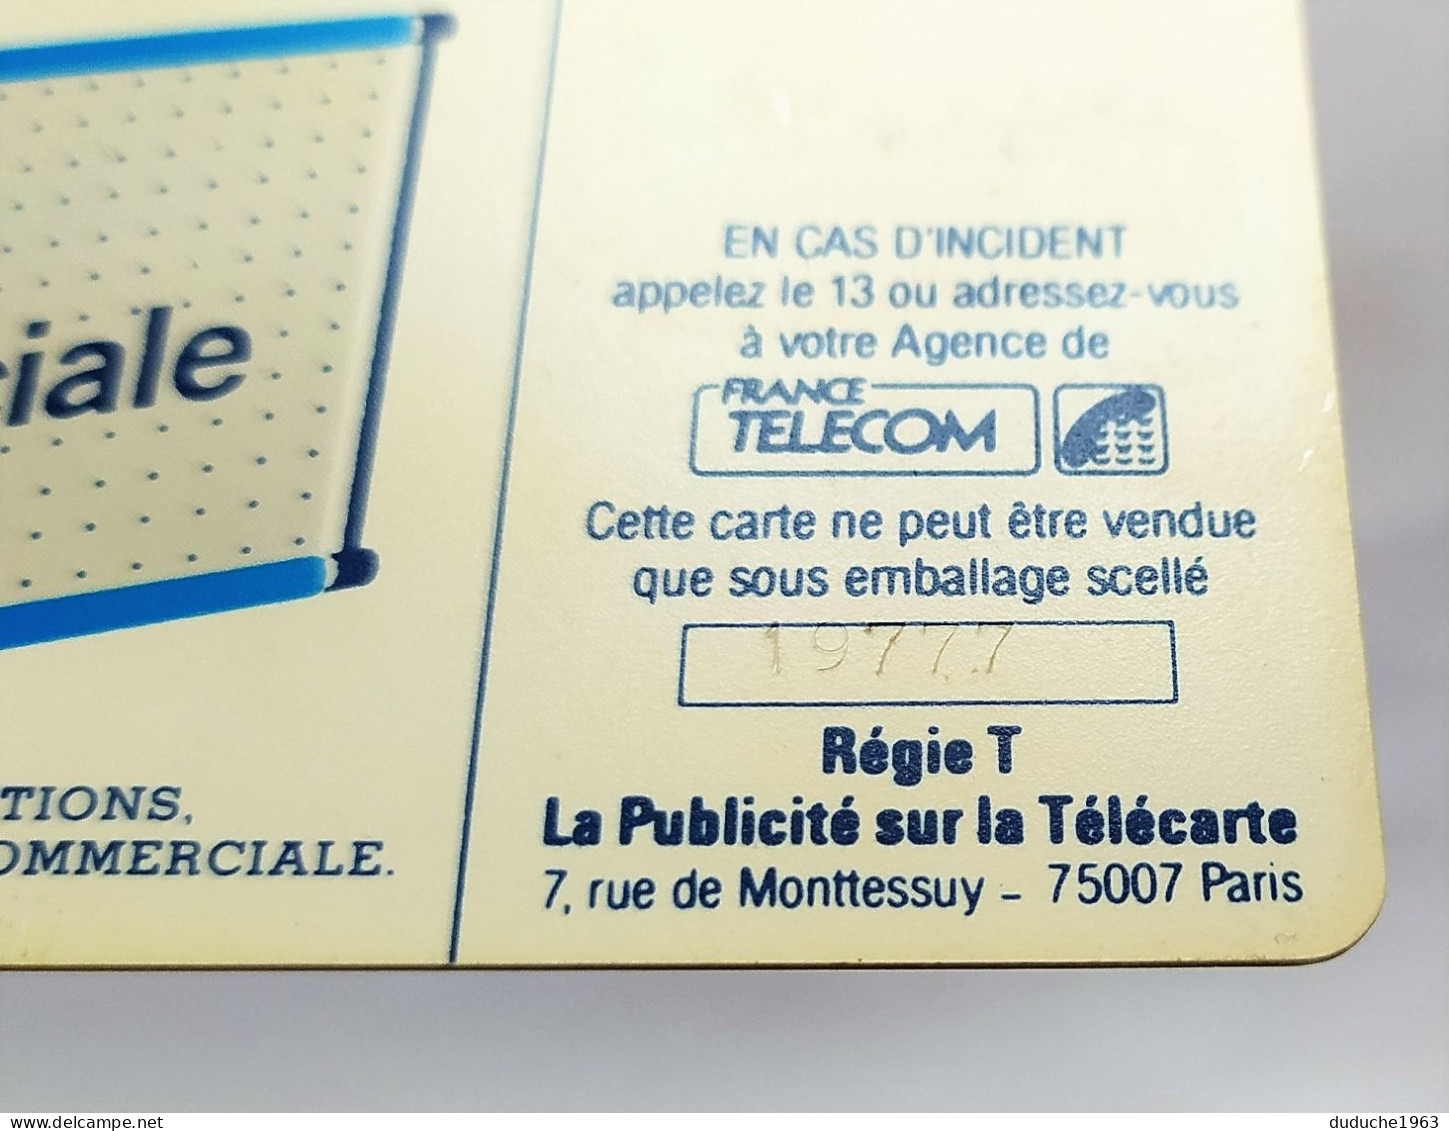 Télécarte France Télécom - 600 Agences - 600 Bedrijven